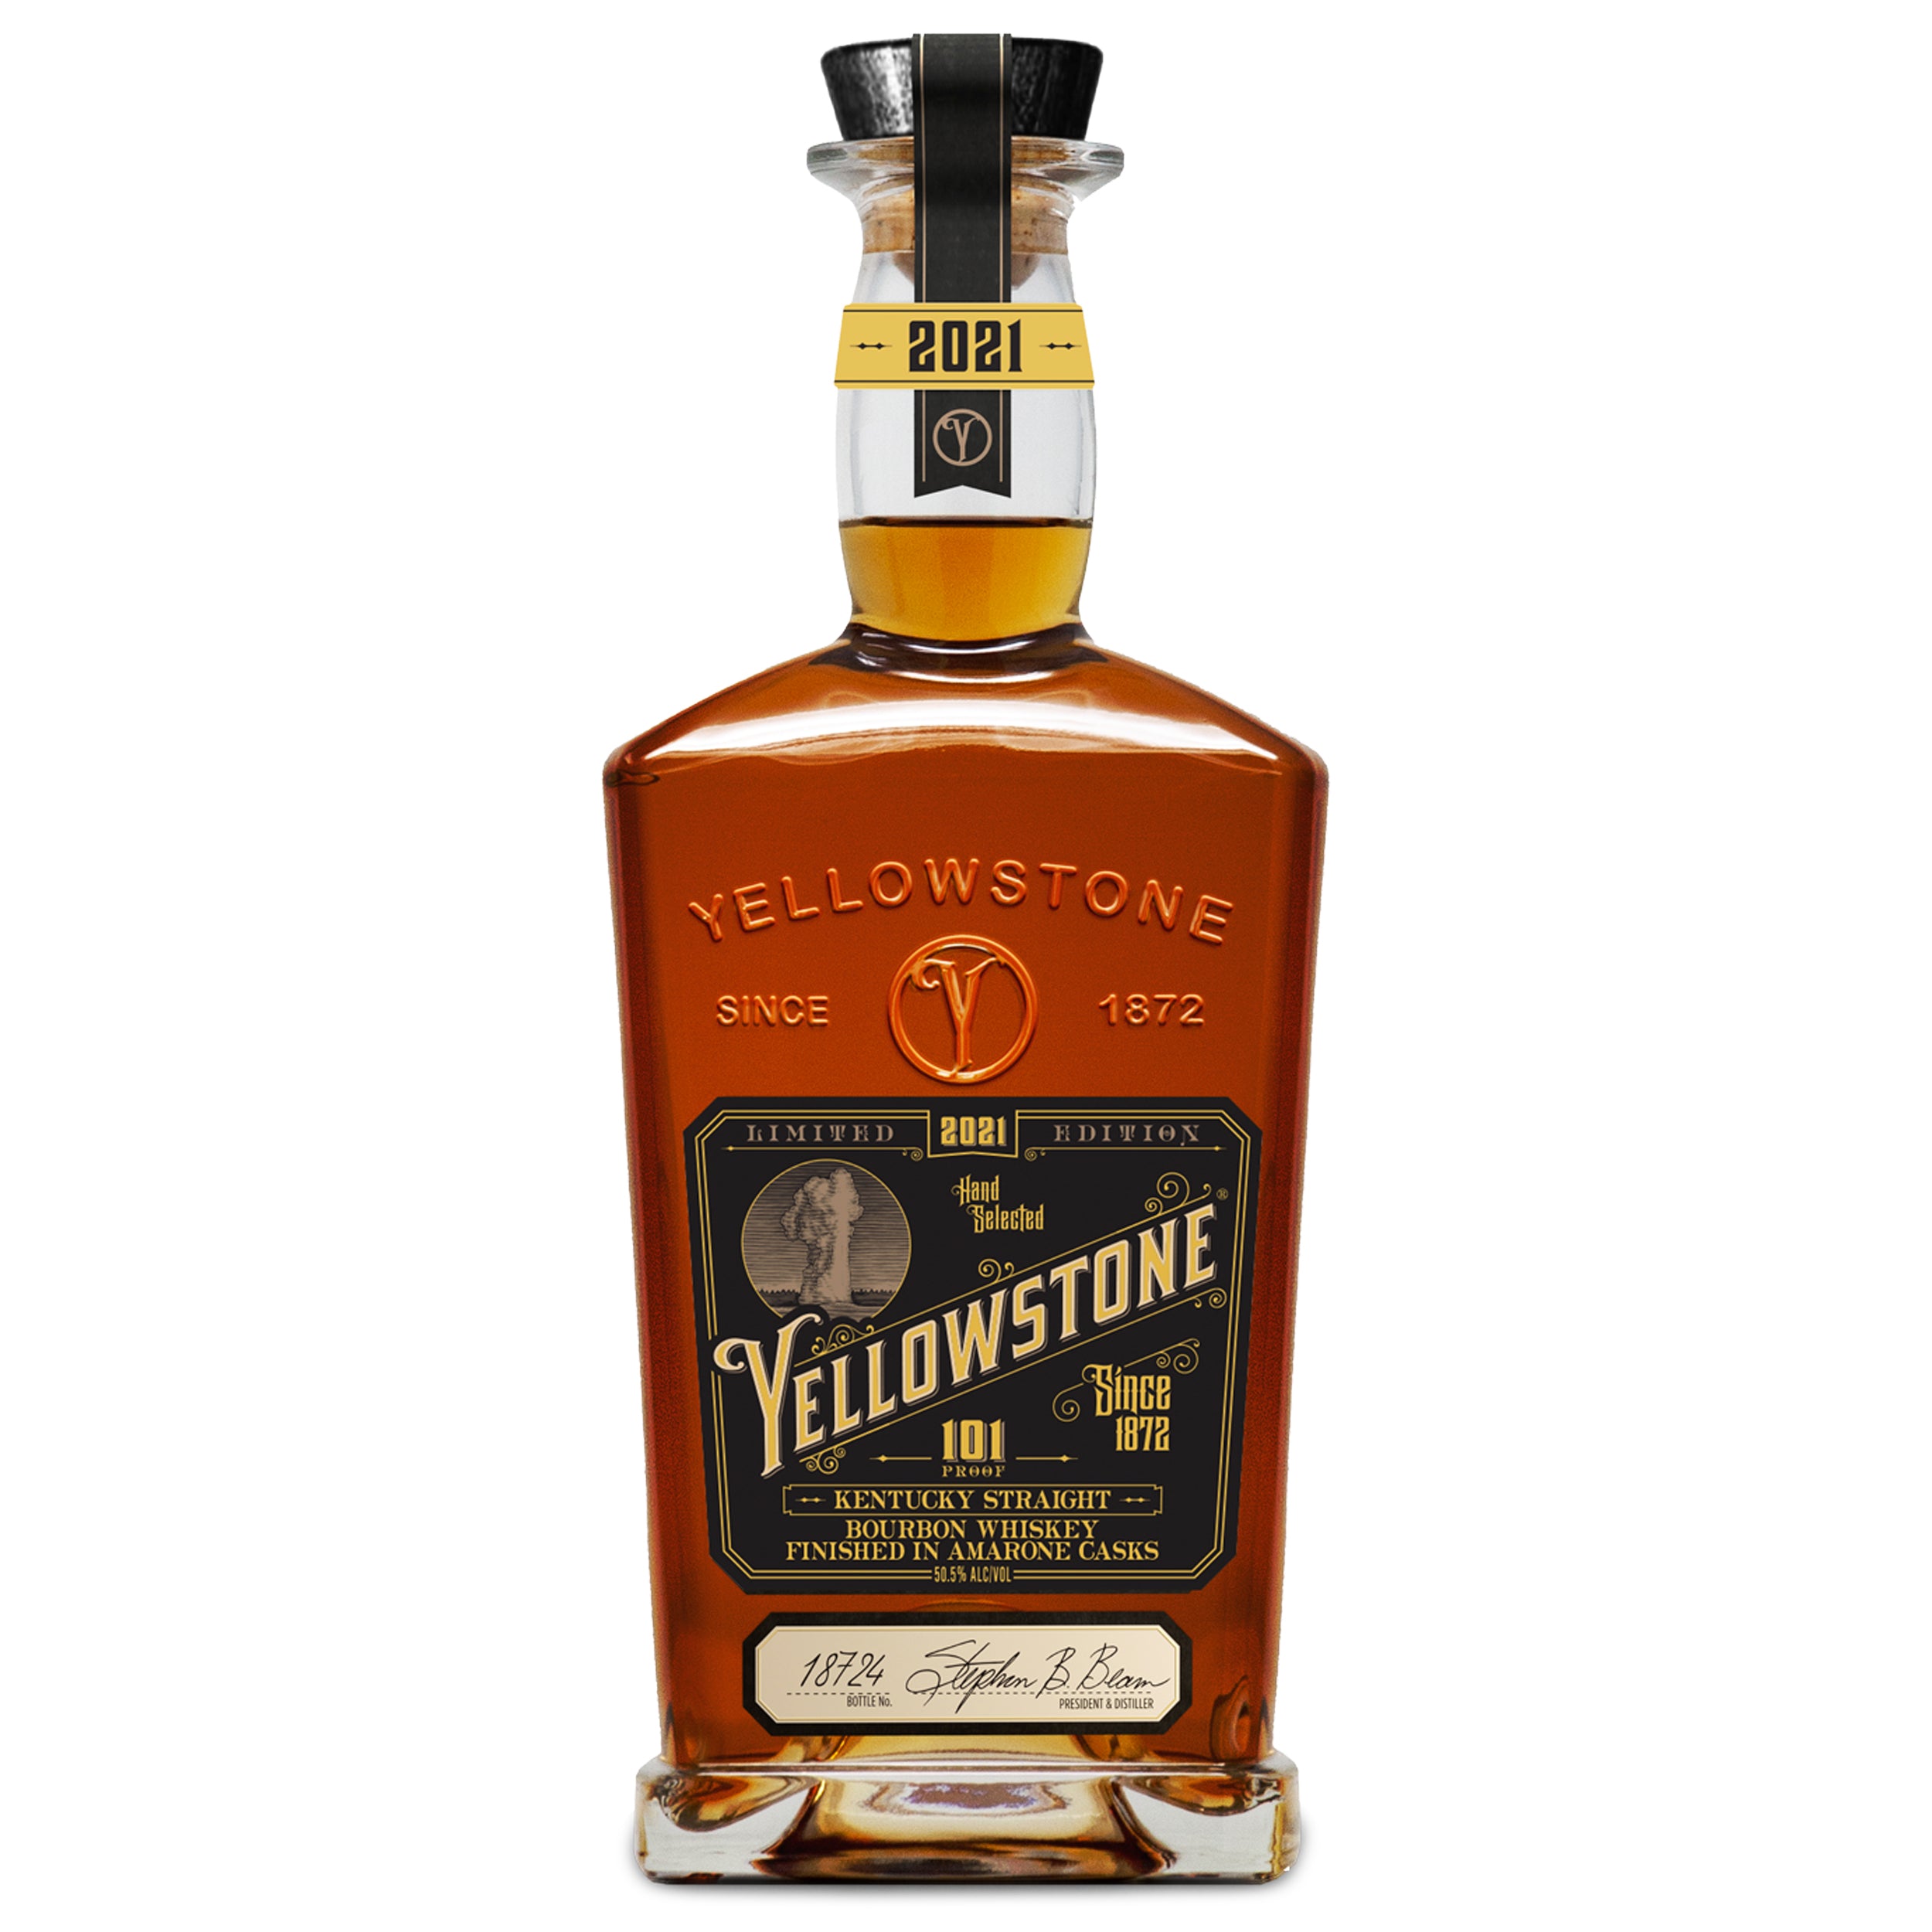 Yellowstone 2021 Limited Edition Bourbon